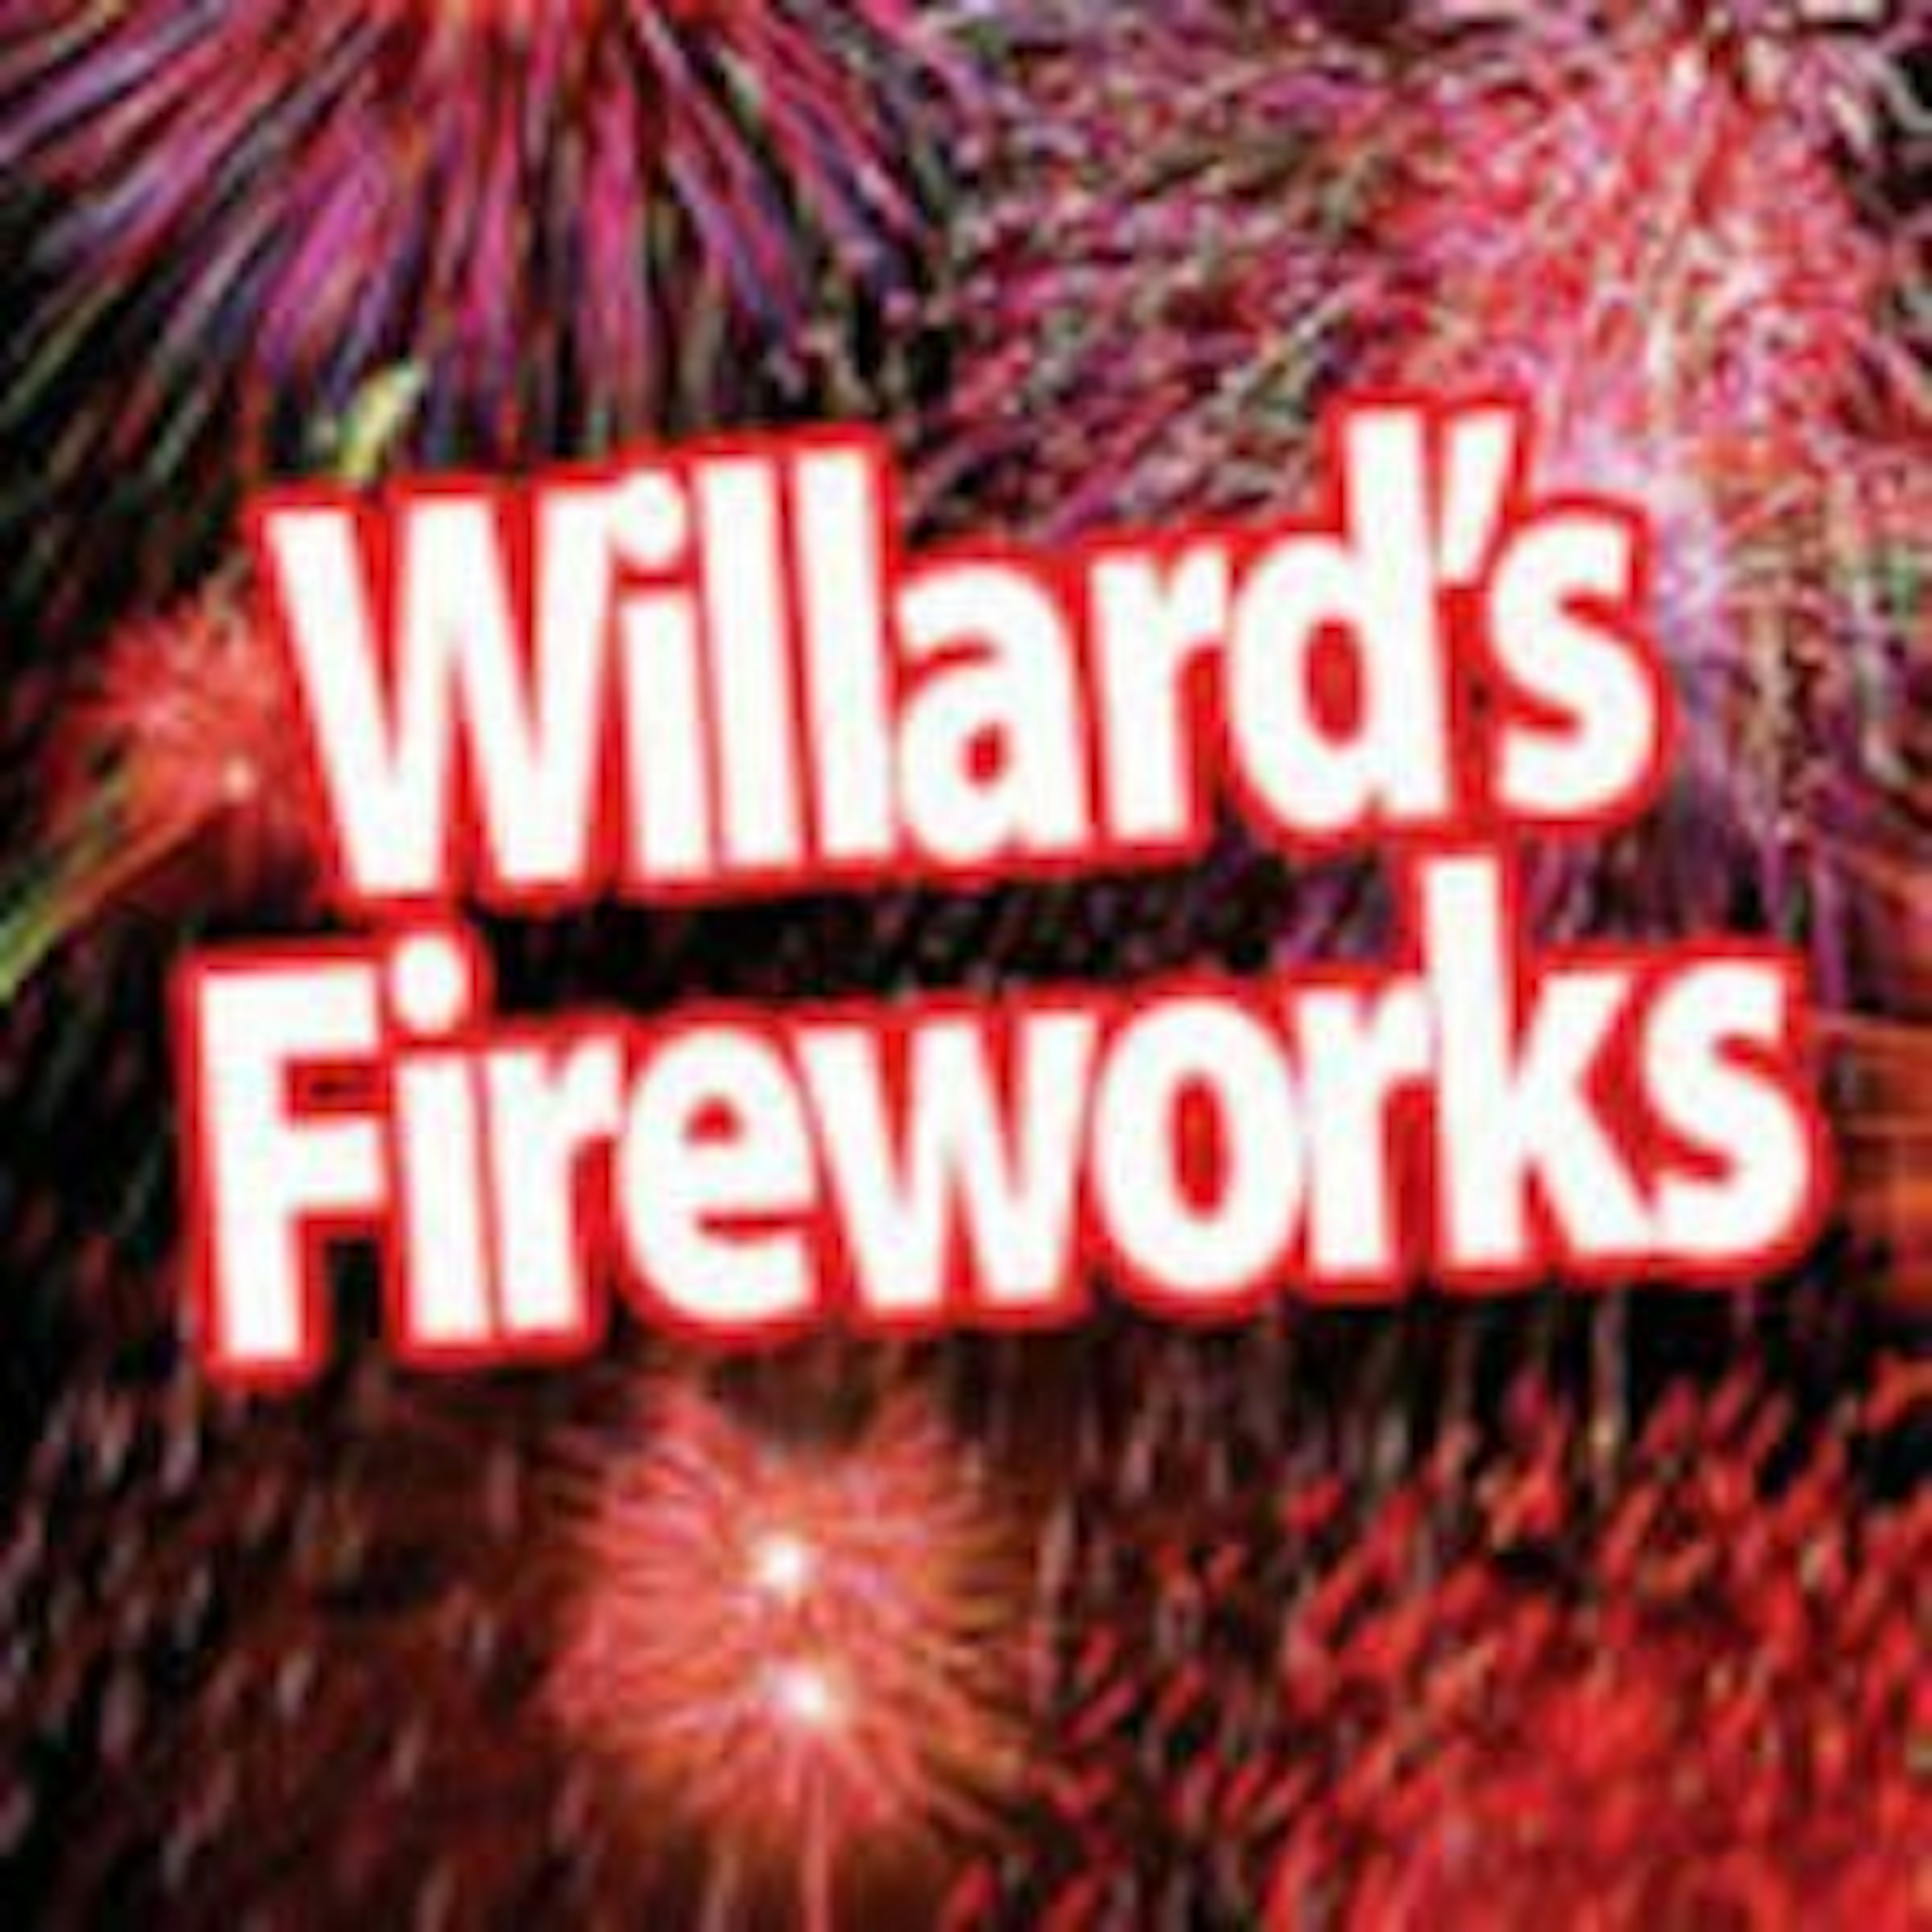 Willard’s Fireworks